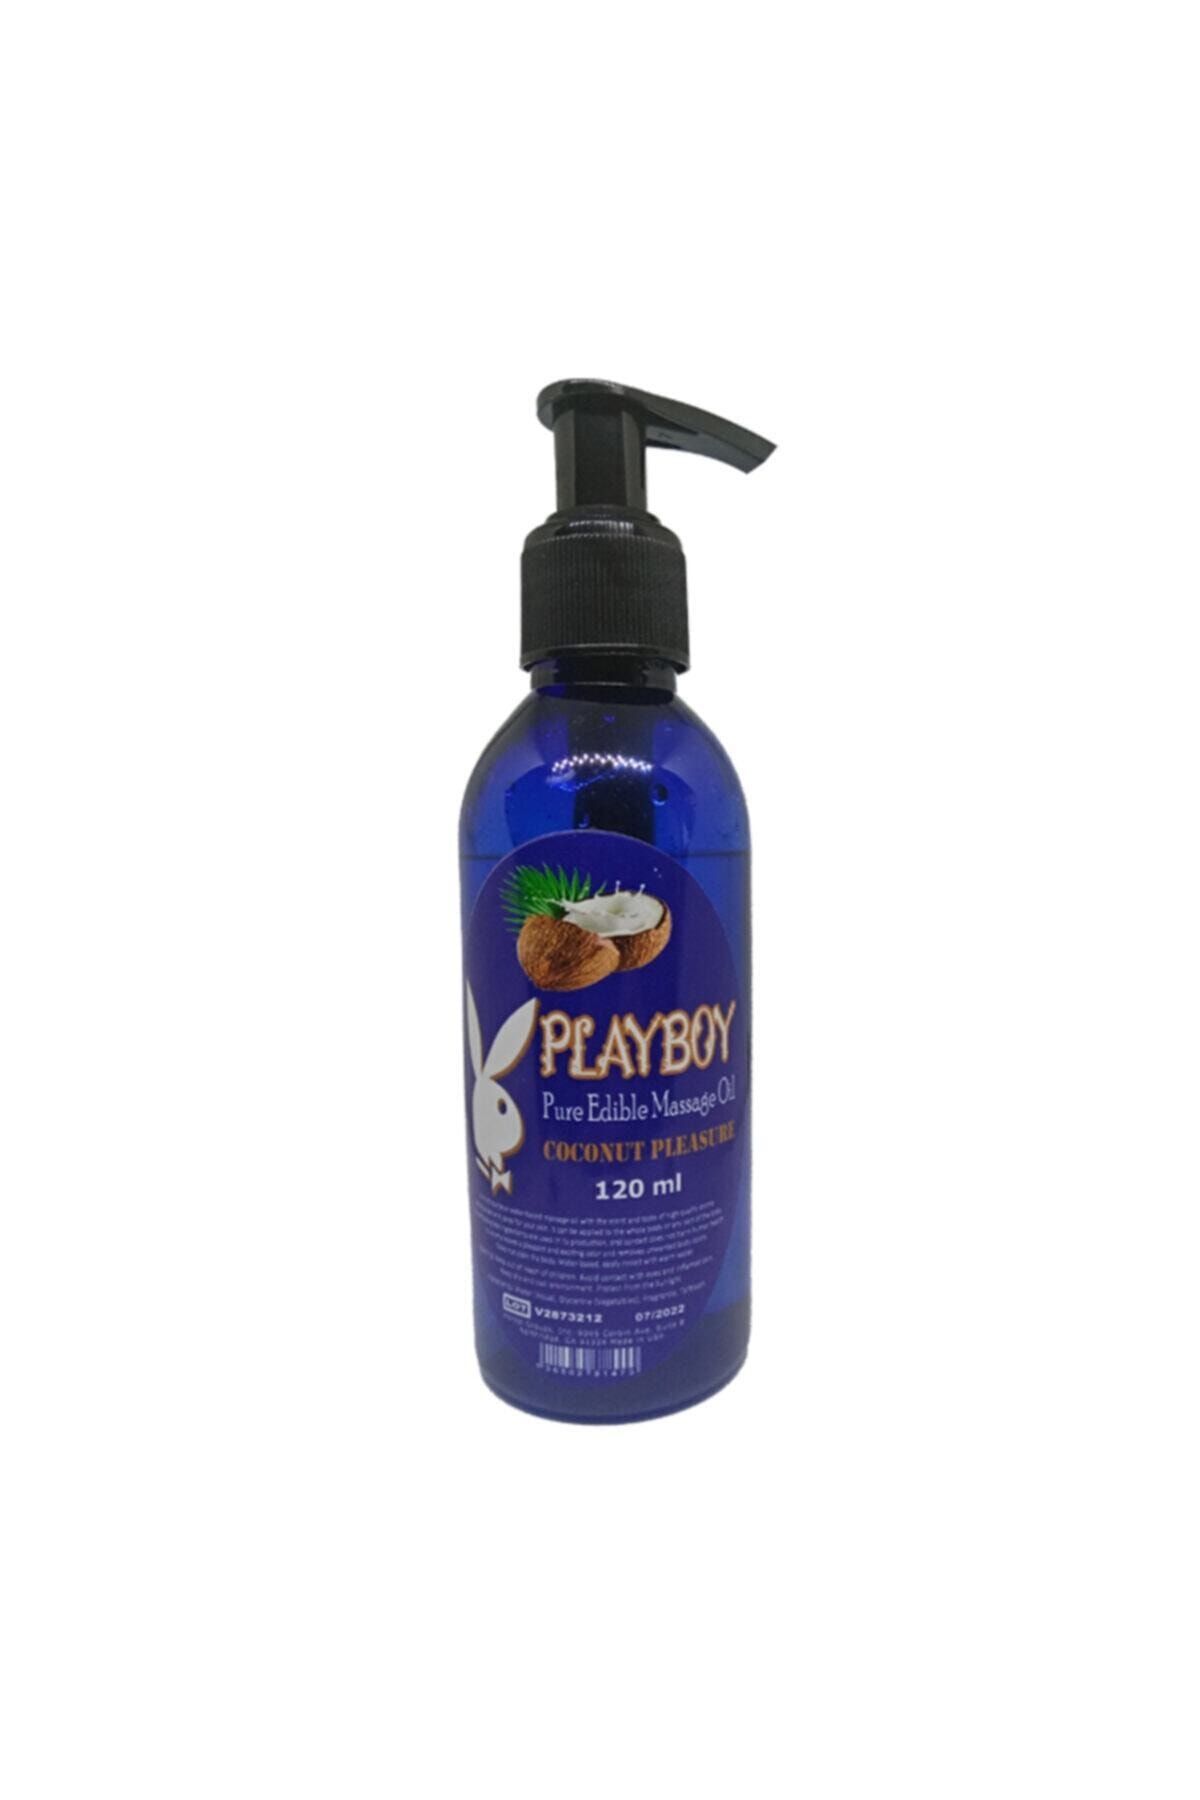 Playboy Pure Edible Massage Oil 120ml Hindistancevizi Aromalı Masaj Yağı